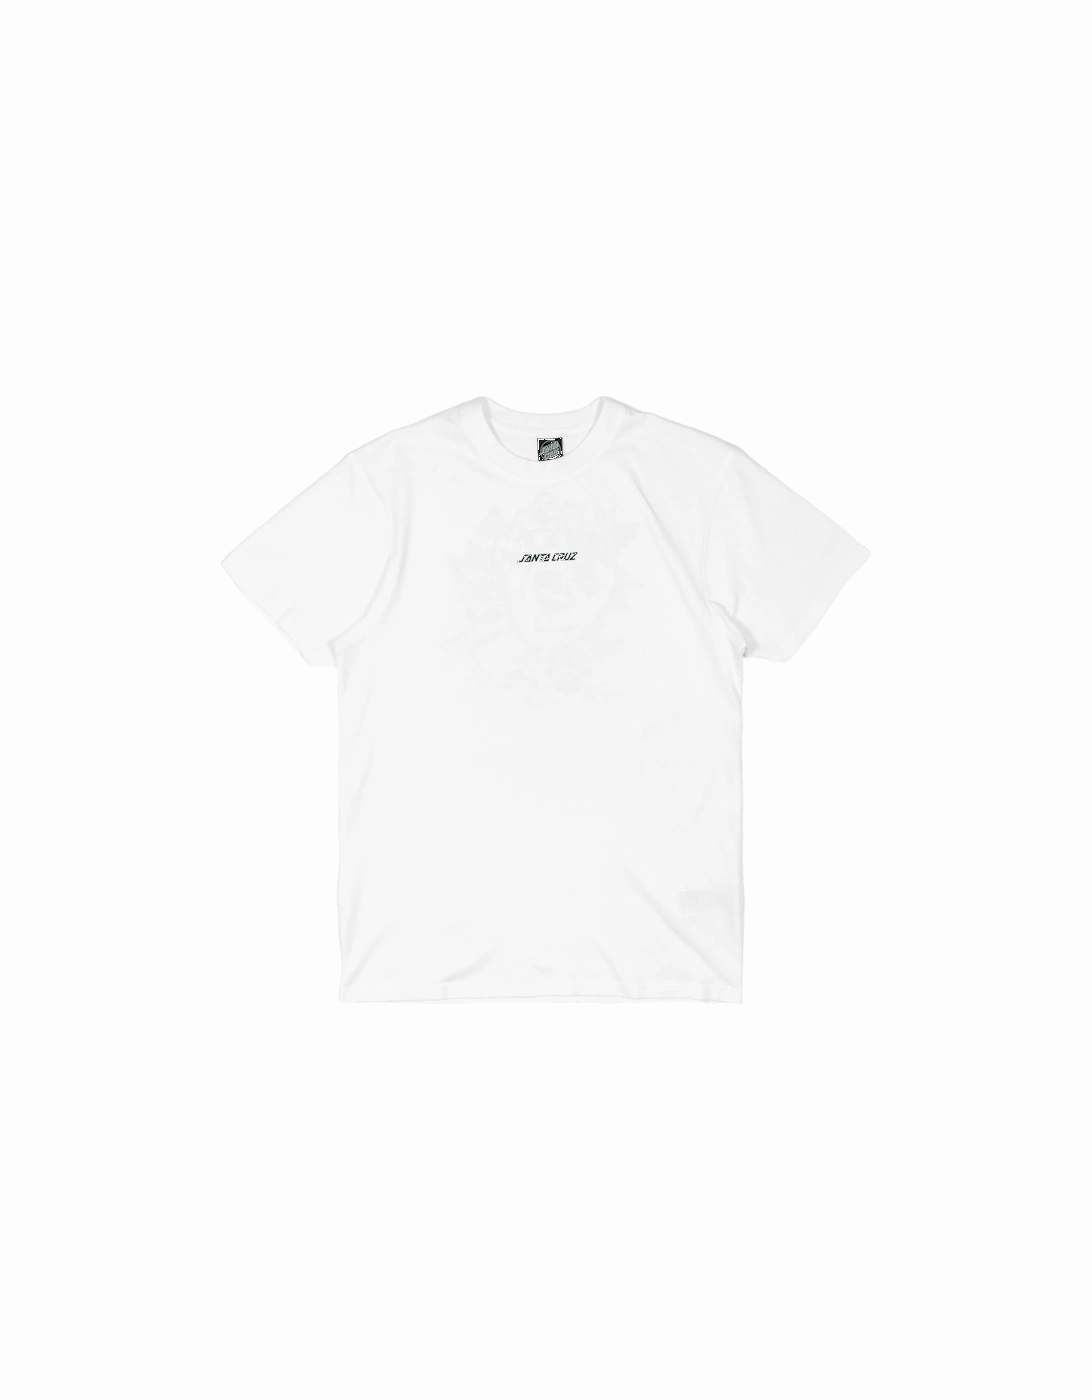 Screaming Flash Center T-Shirt - White